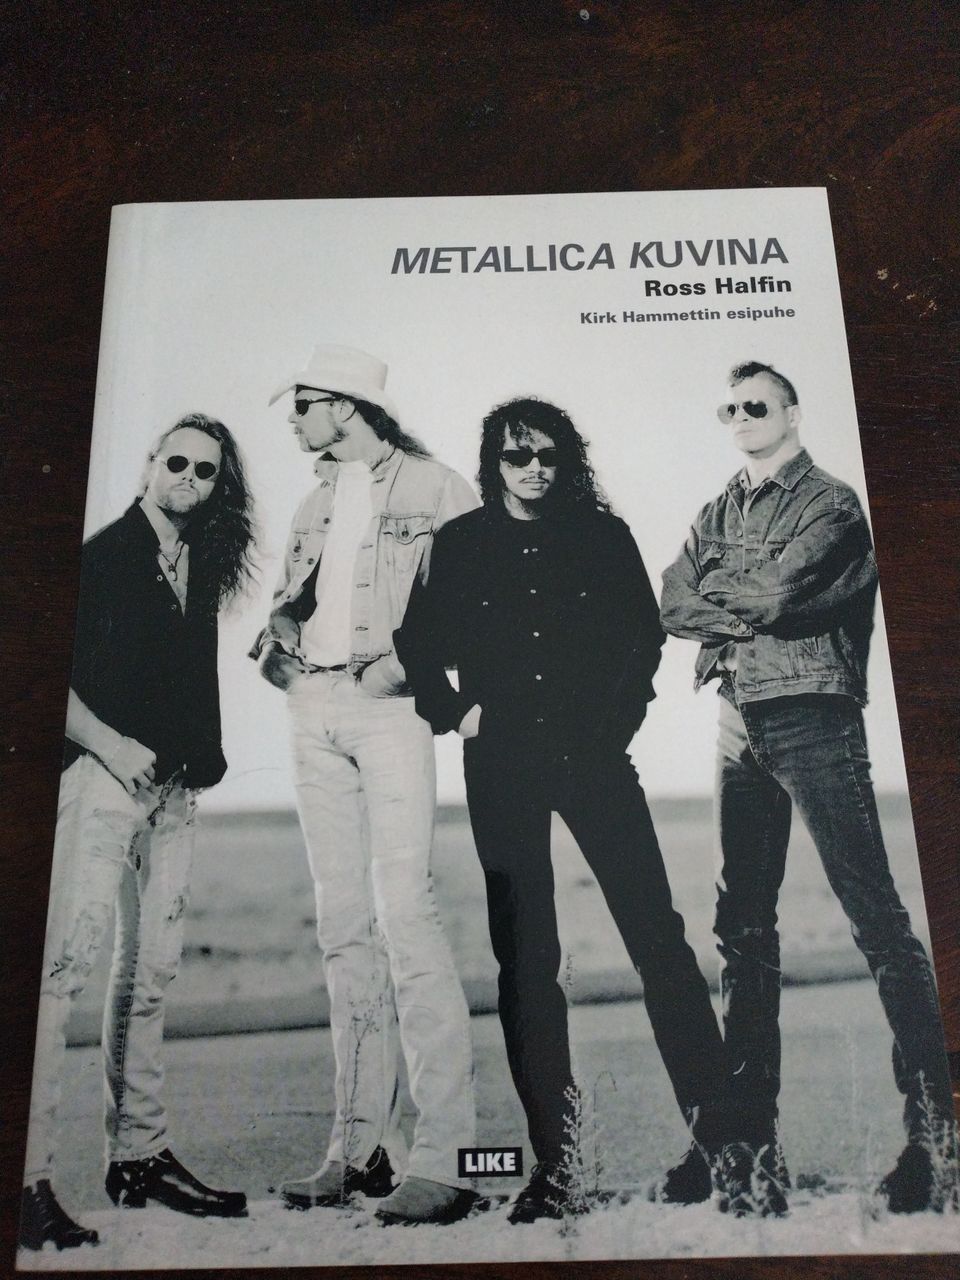 Metallica kuvina Ross Halfin